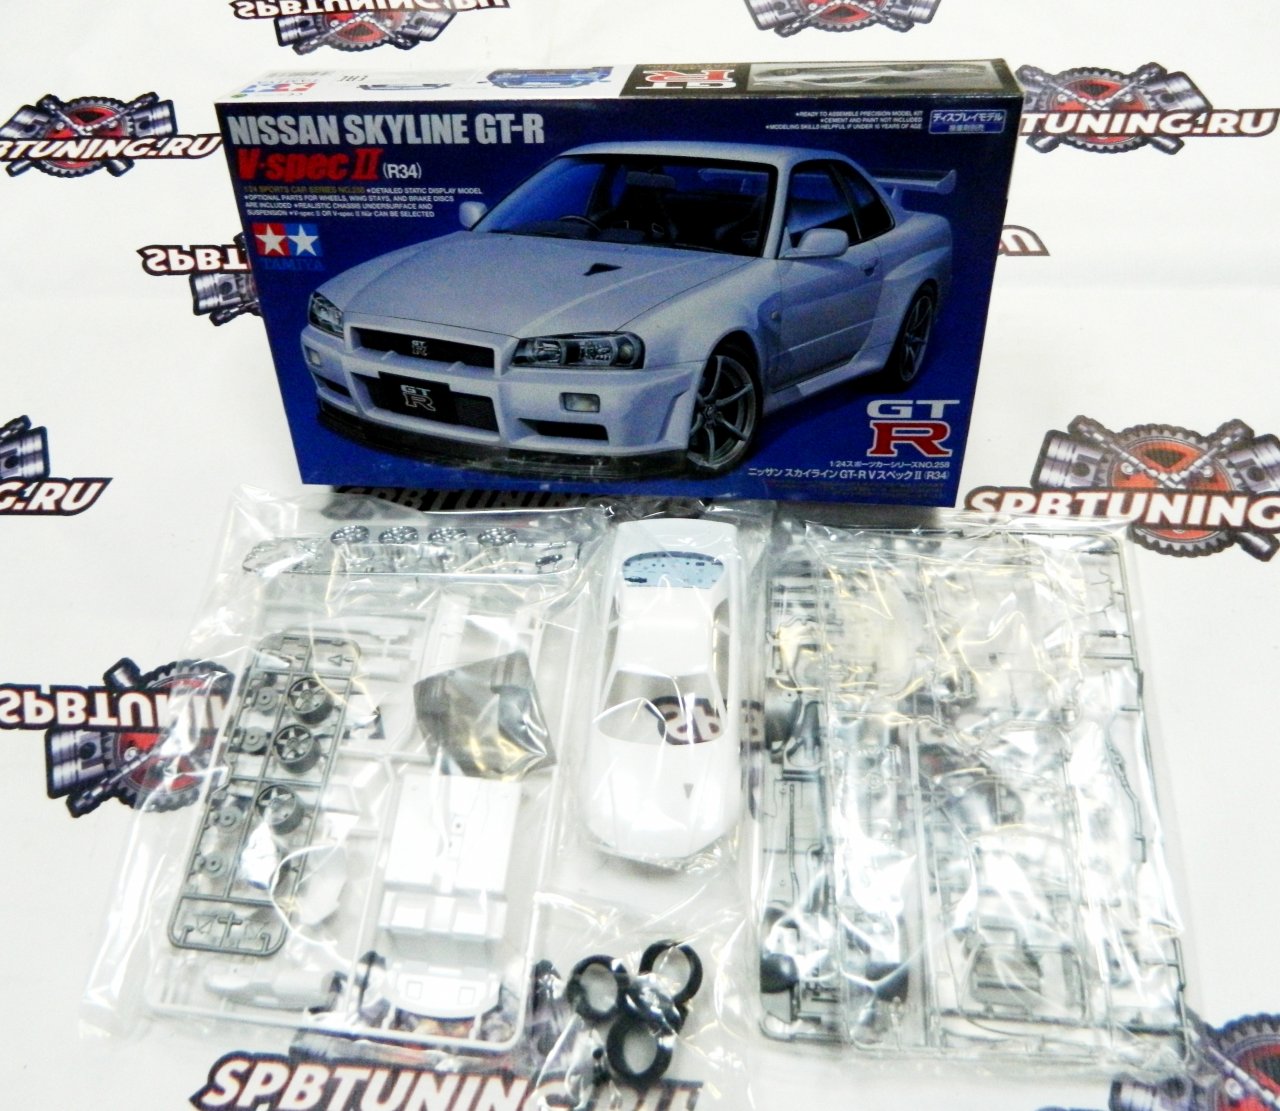 Сборная модель Nissan Skyline GT-R V-spec II (R34) 1:24